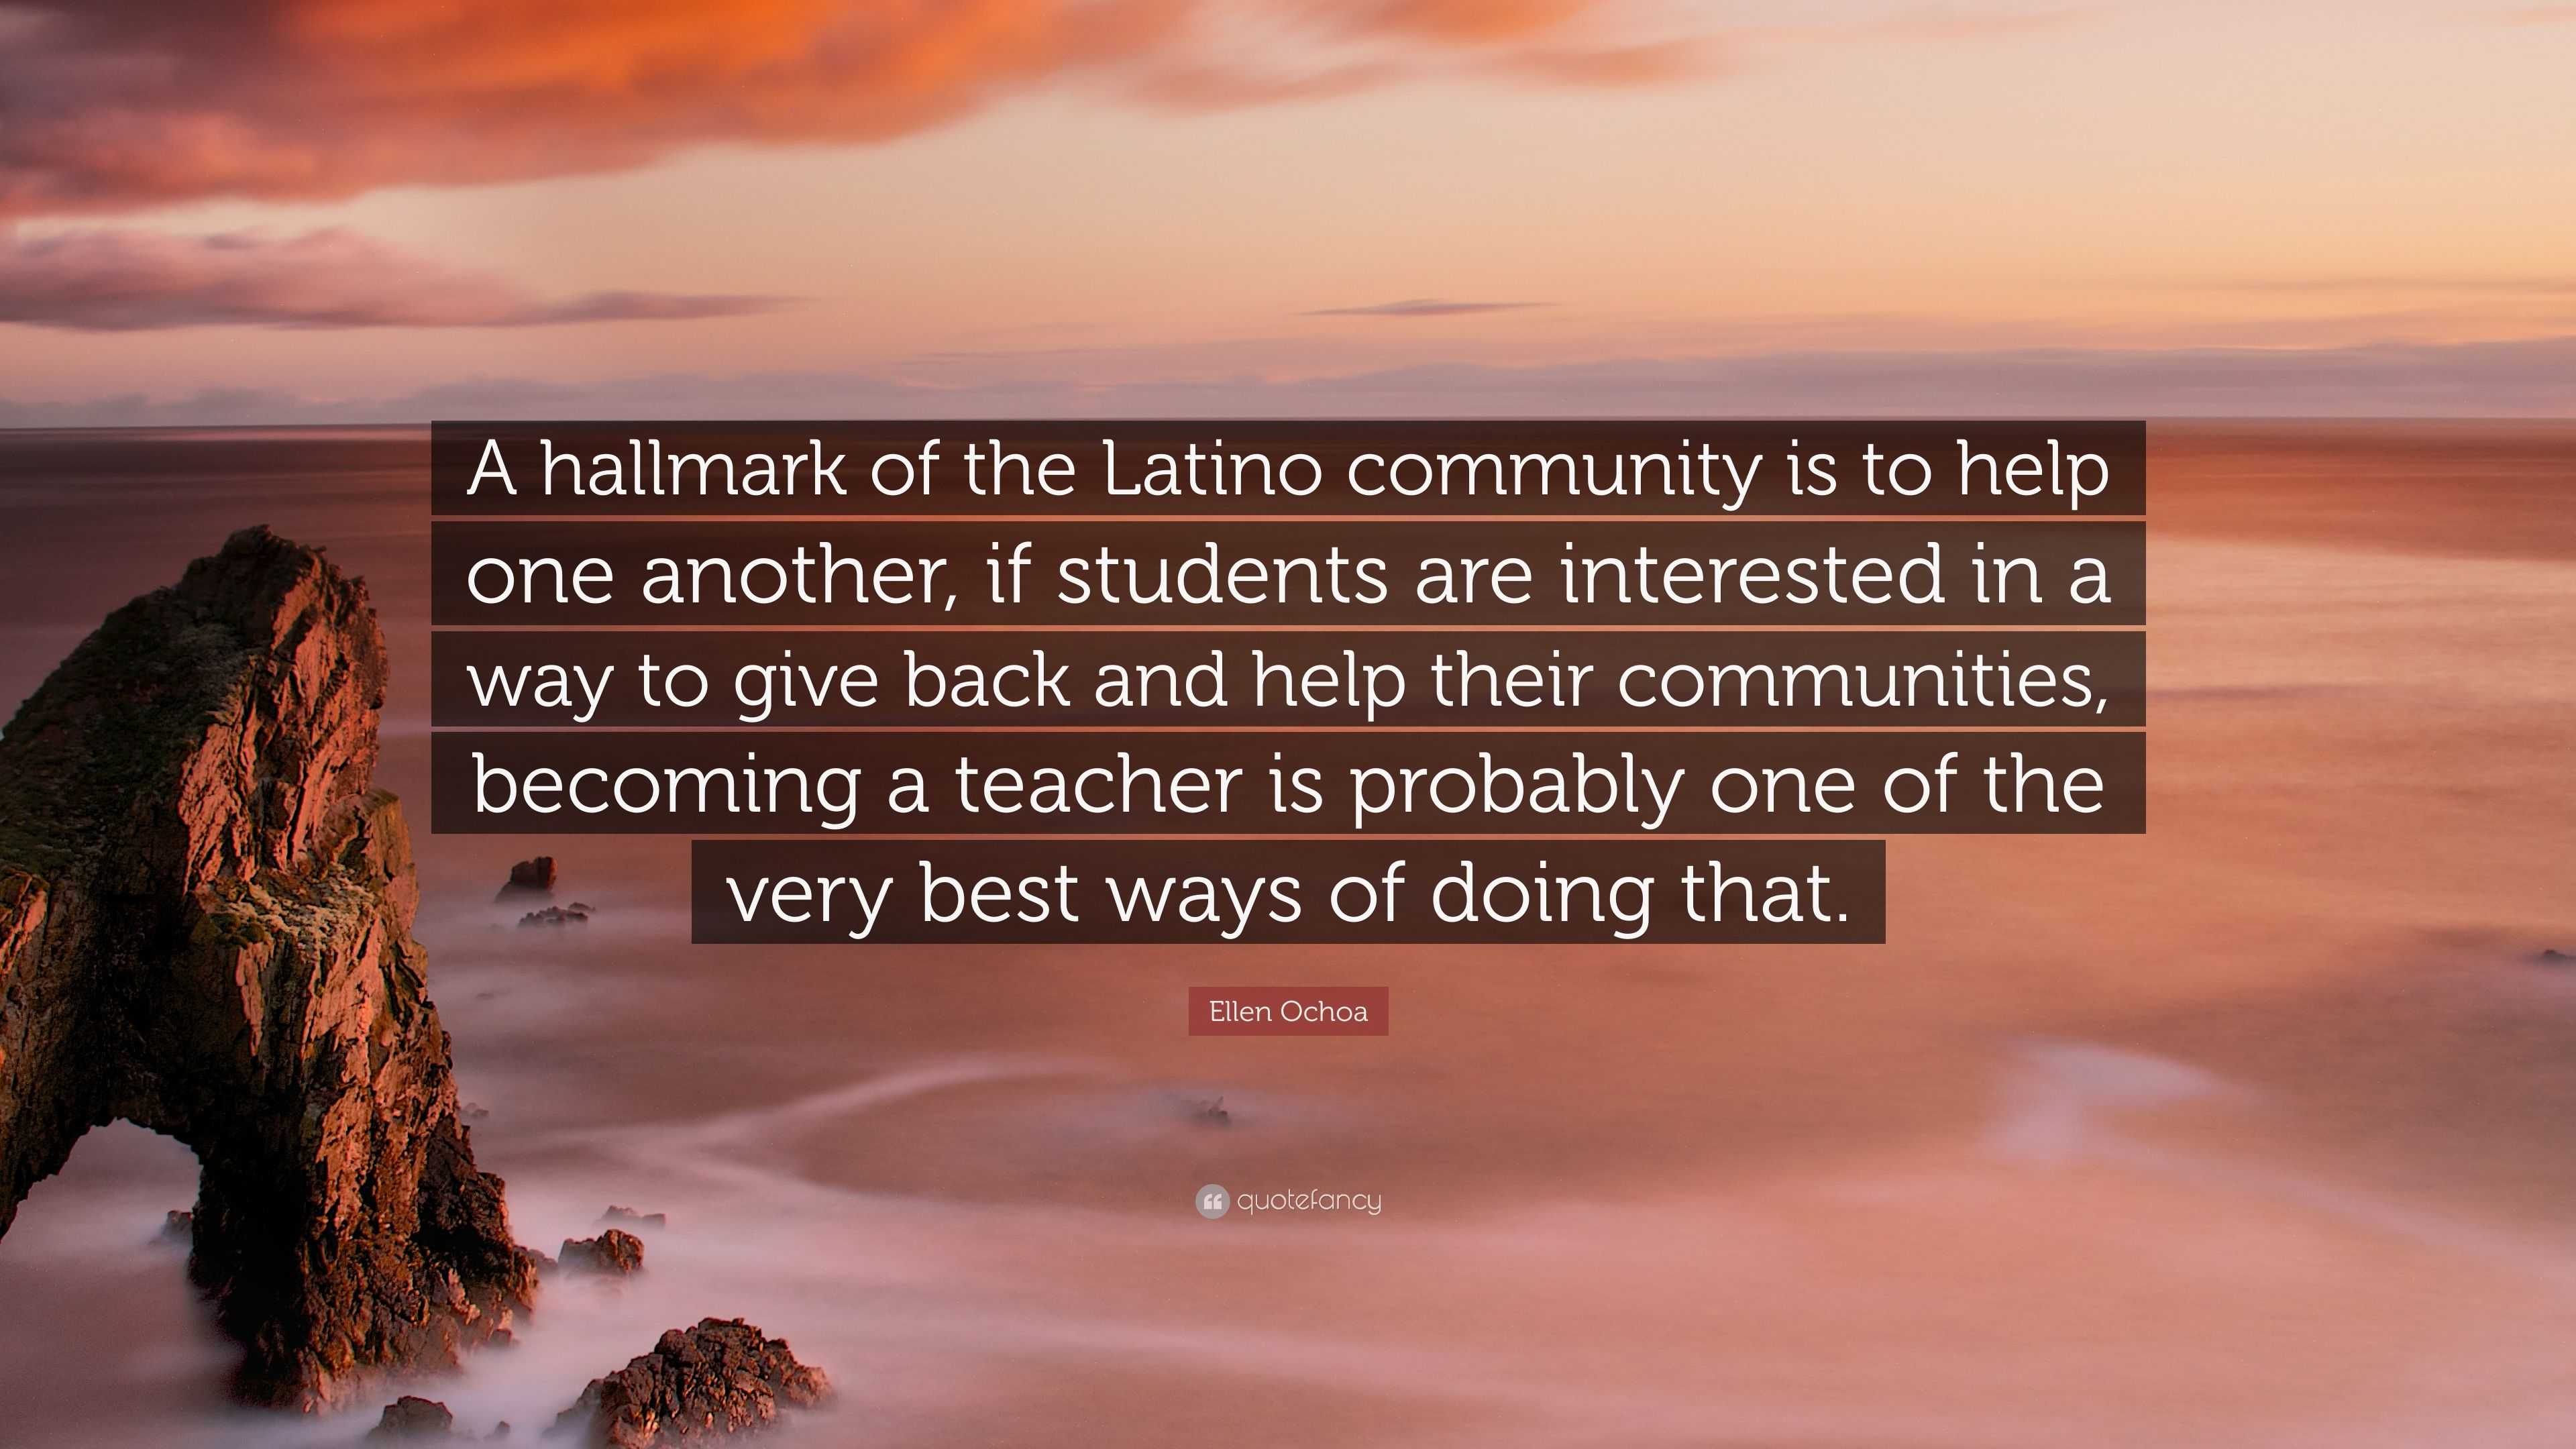 Ellen Ochoa Quote: “A hallmark of the Latino community is to help one ...